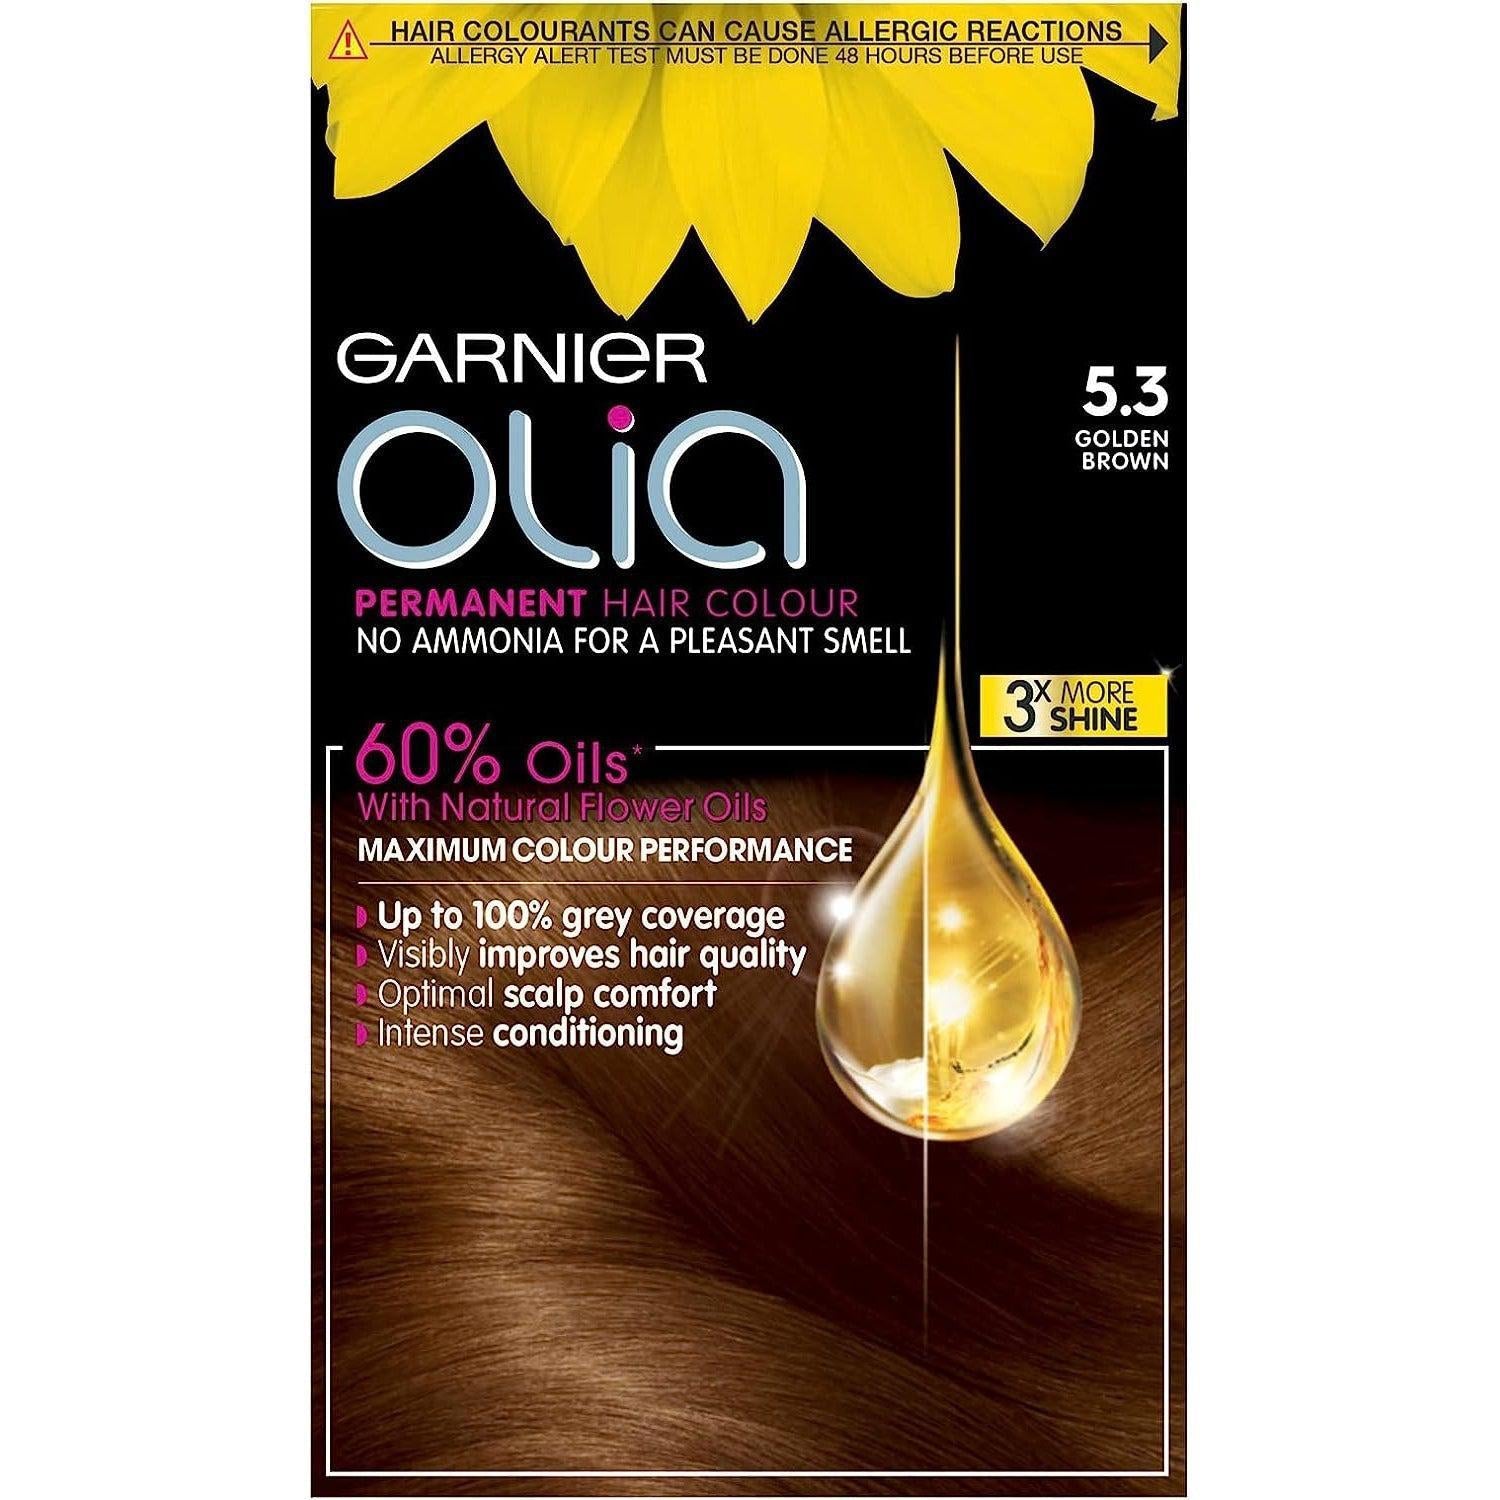 Garnier Olia 5.3 Golden Brown Permanent Hair Dye - Healthxpress.ie